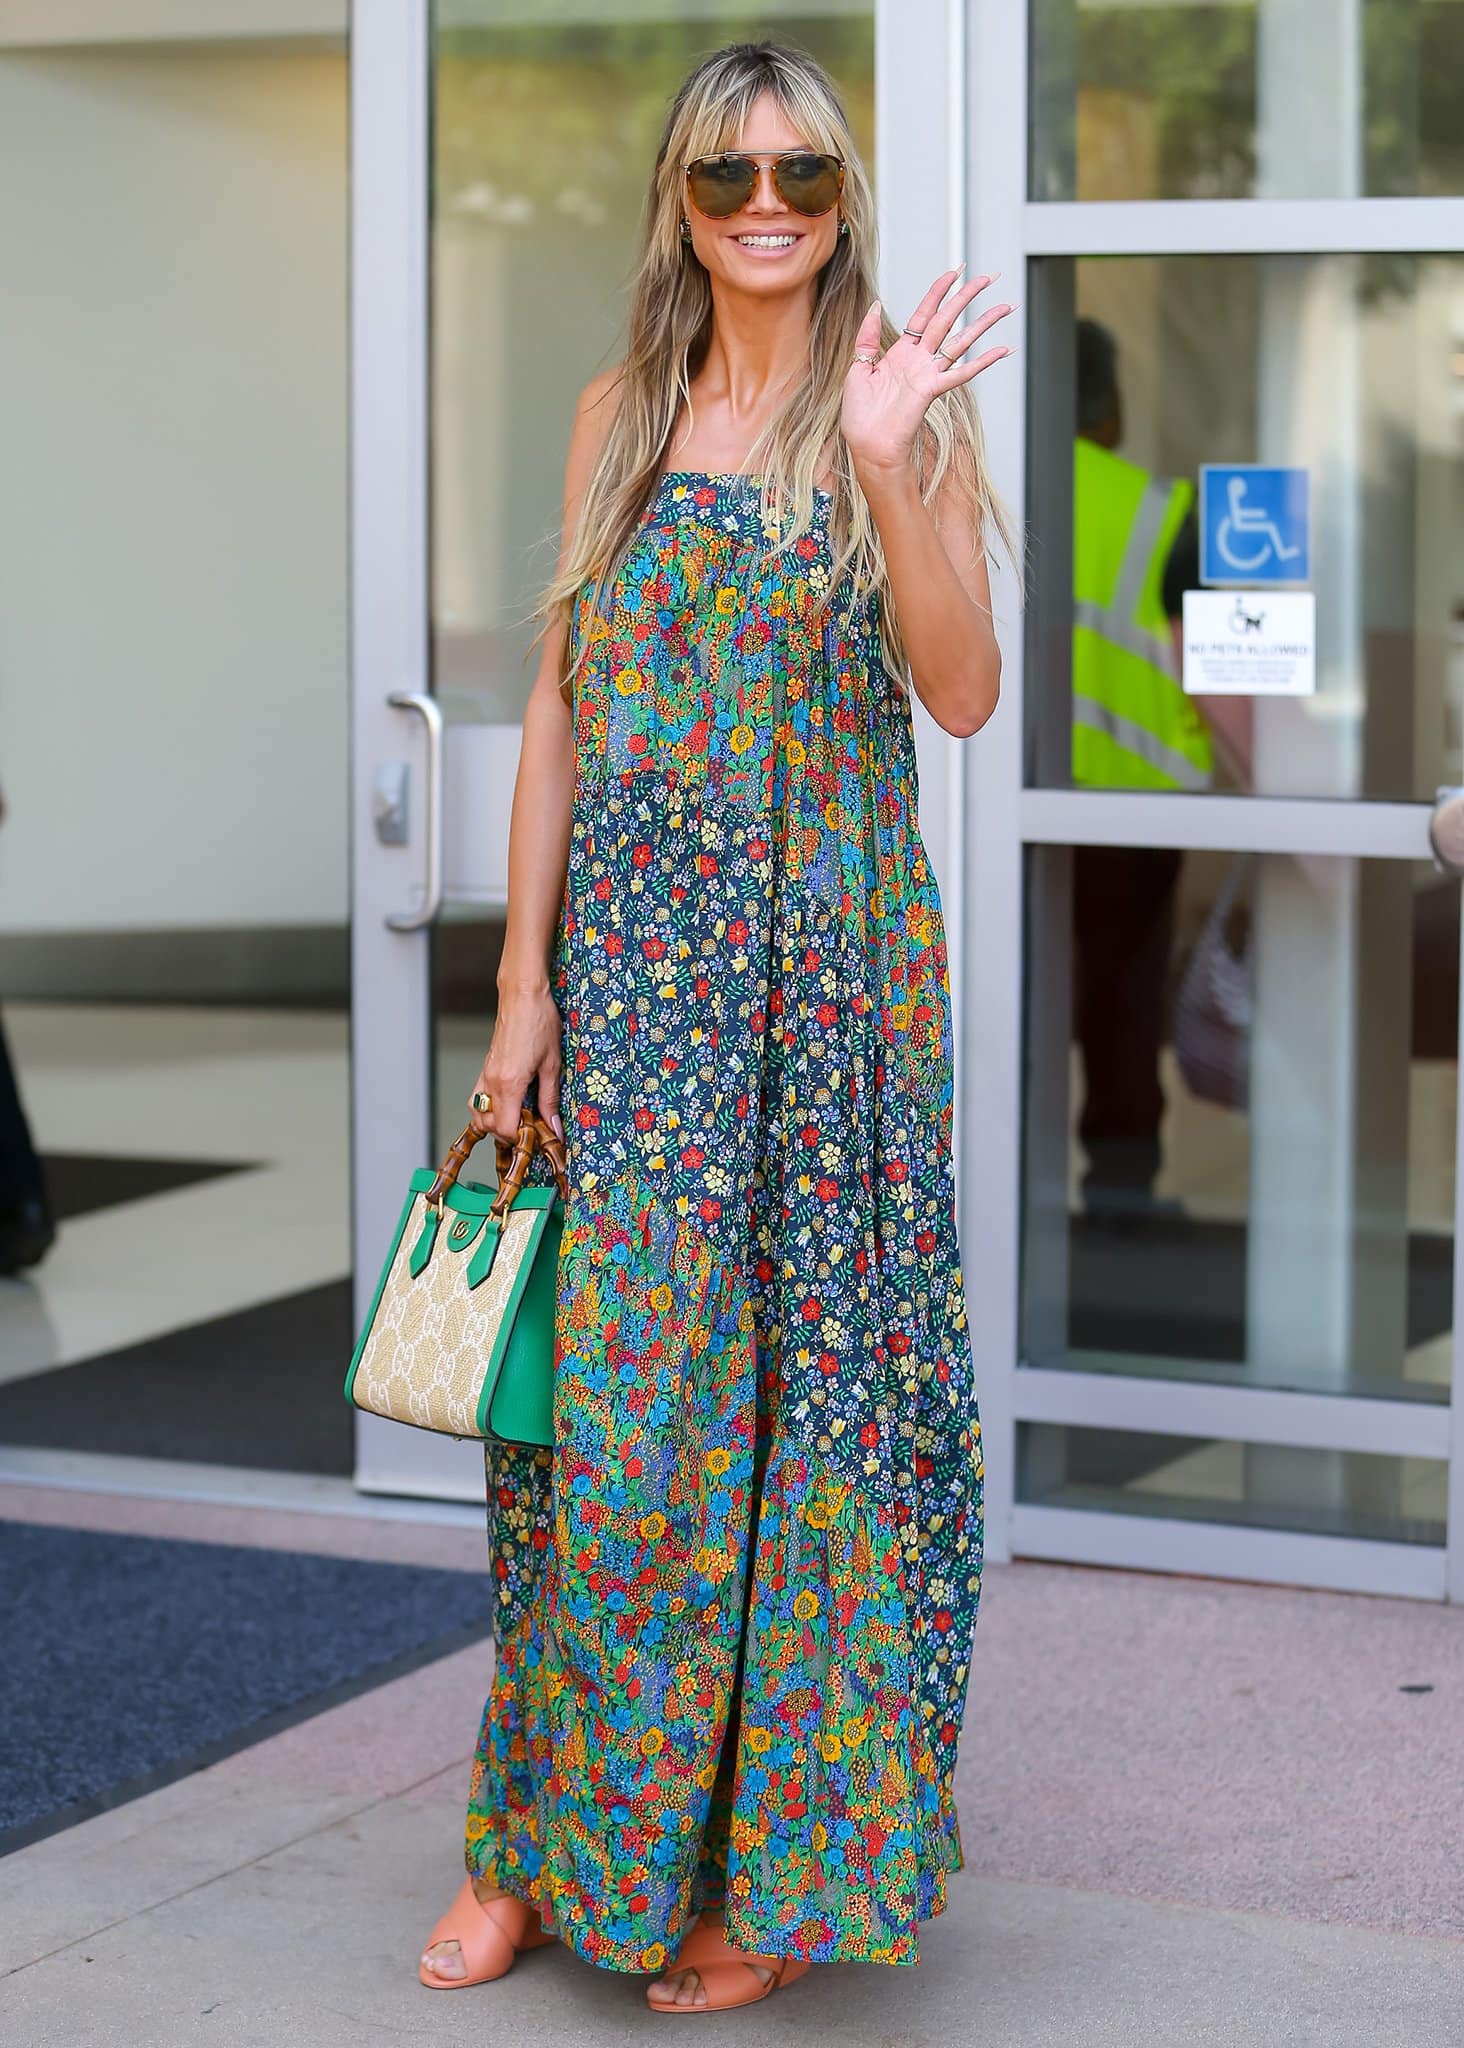 Heidi Klum pairs her casual summer dress with peach wedges and aviators